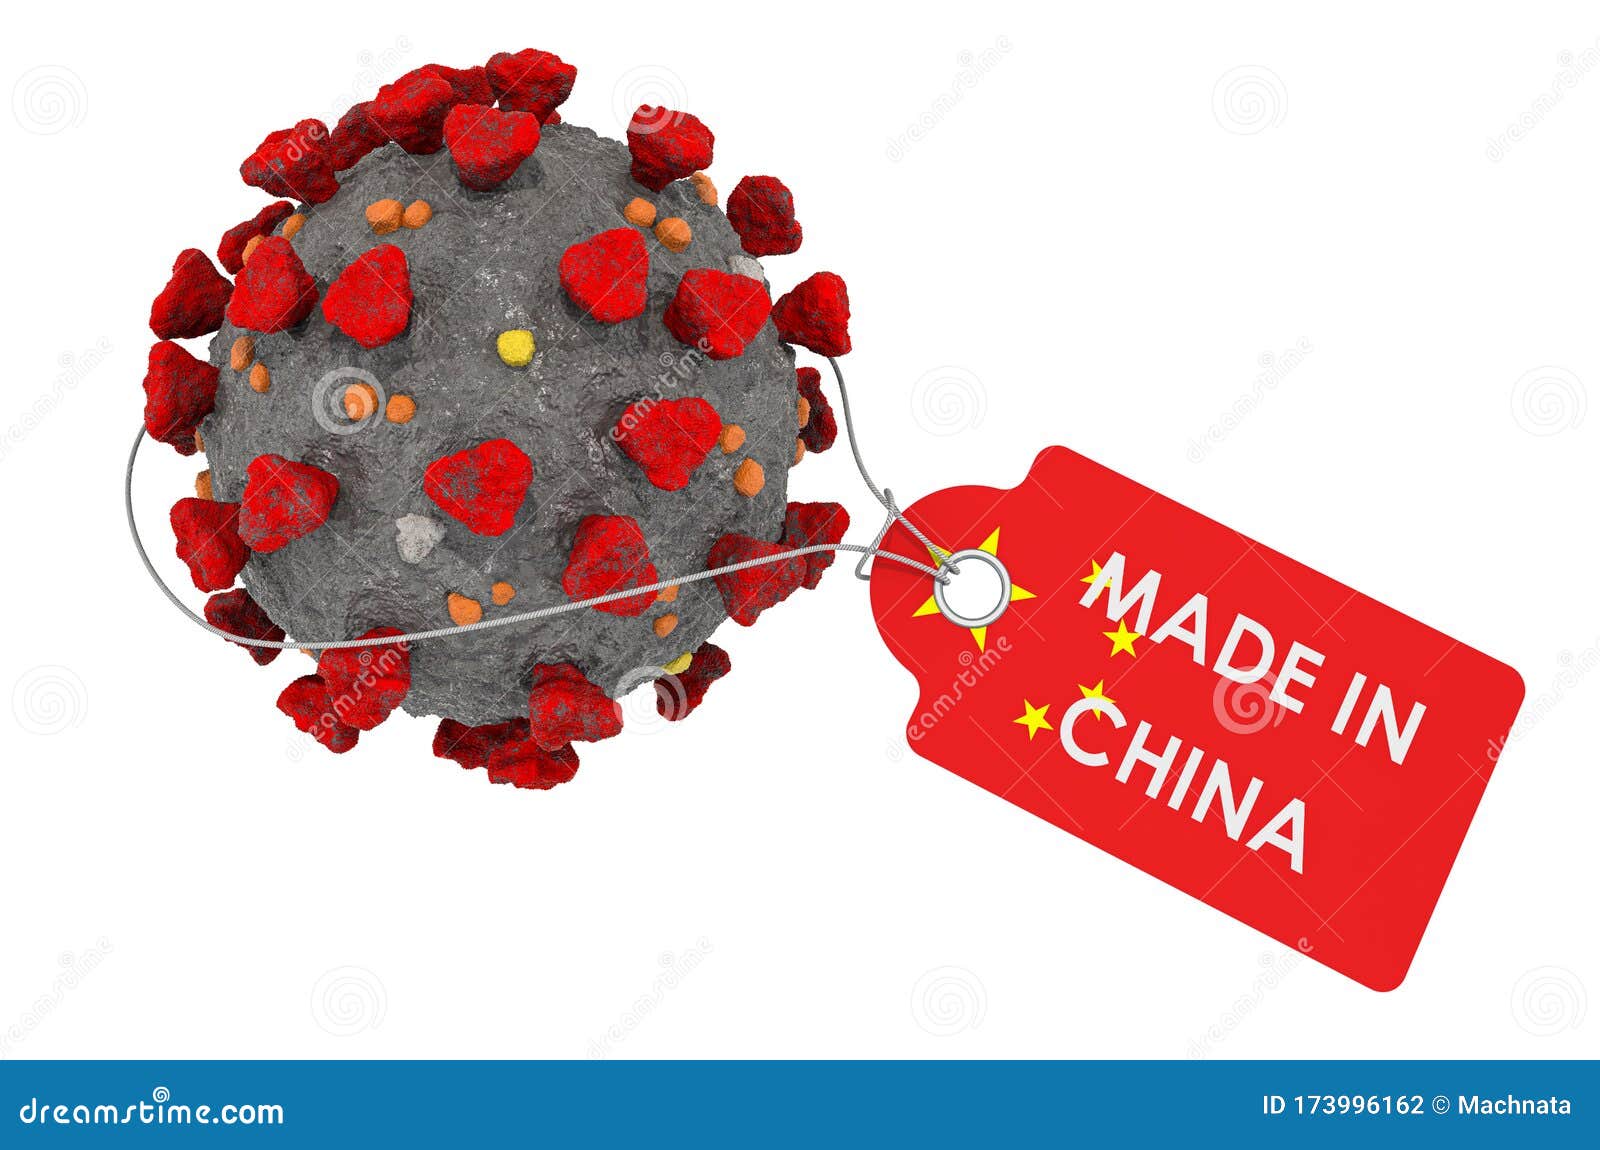 chinese-coronavirus-tag-made-china-d-rendering-isolated-white-background-173996162.jpg